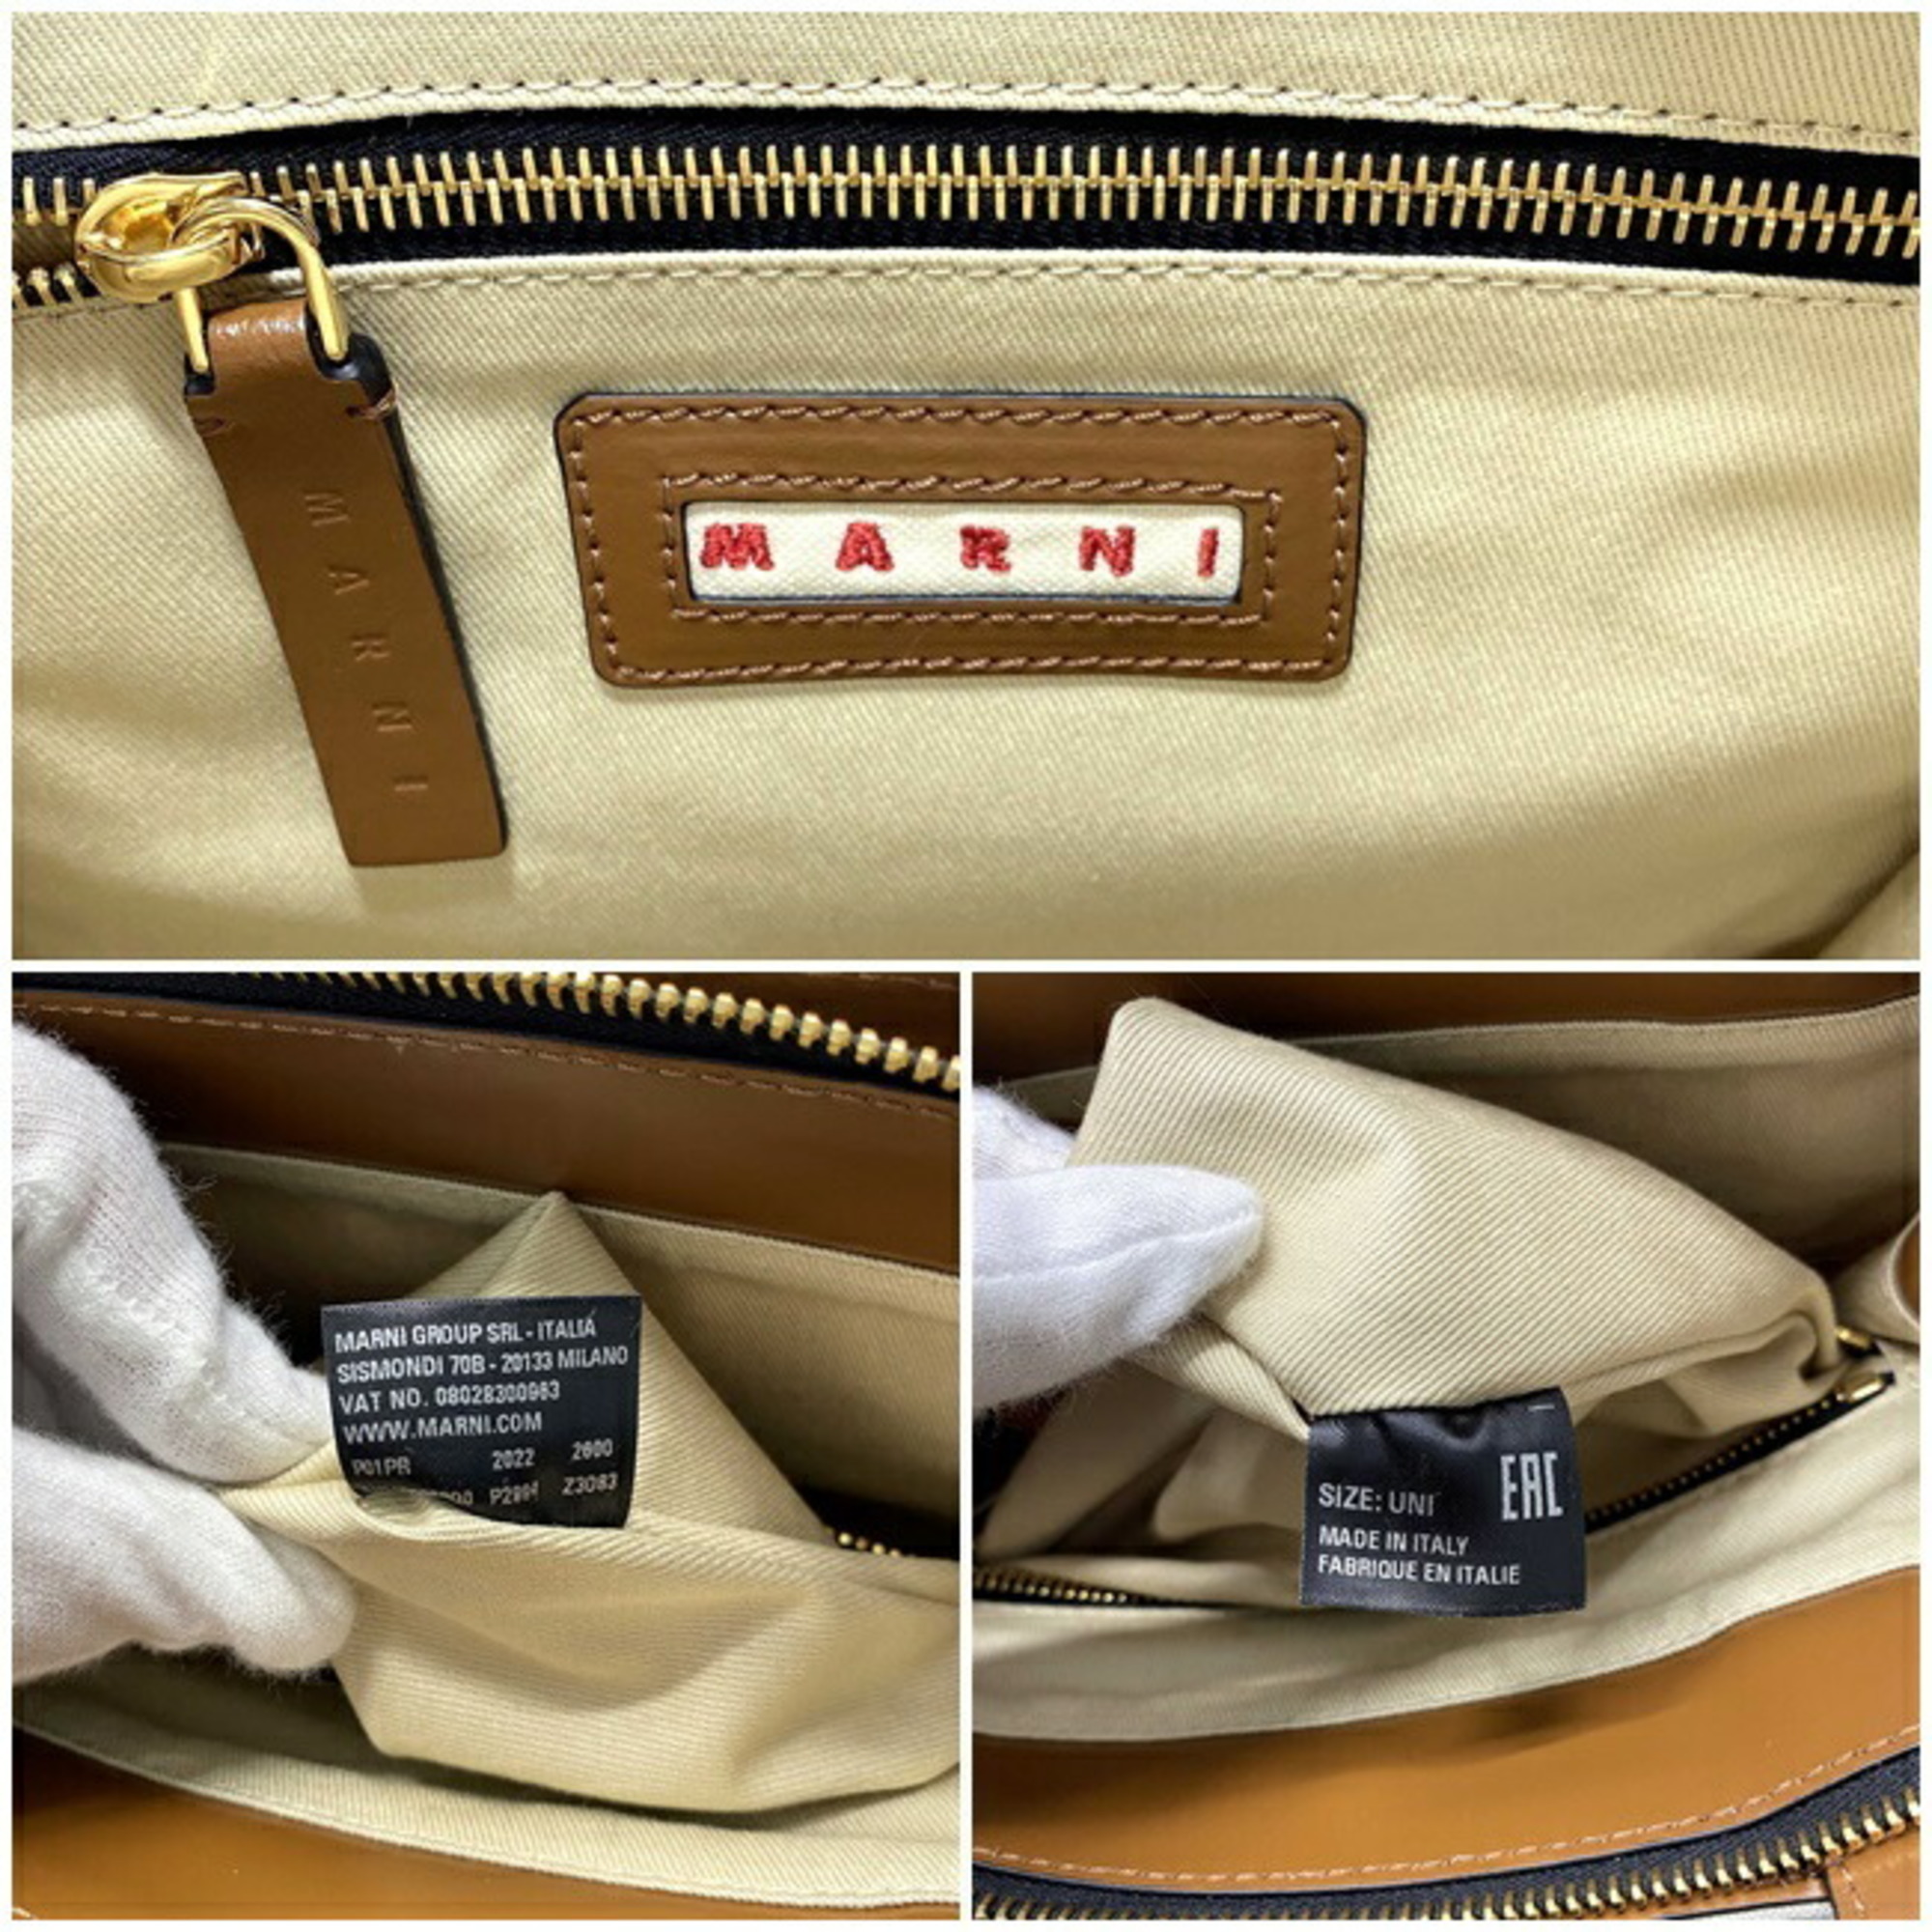 Marni Tote Bag Natural White Brown SHMP0068Q0 P2994 Canvas Leather MARNI Handbag Bicolor Ladies